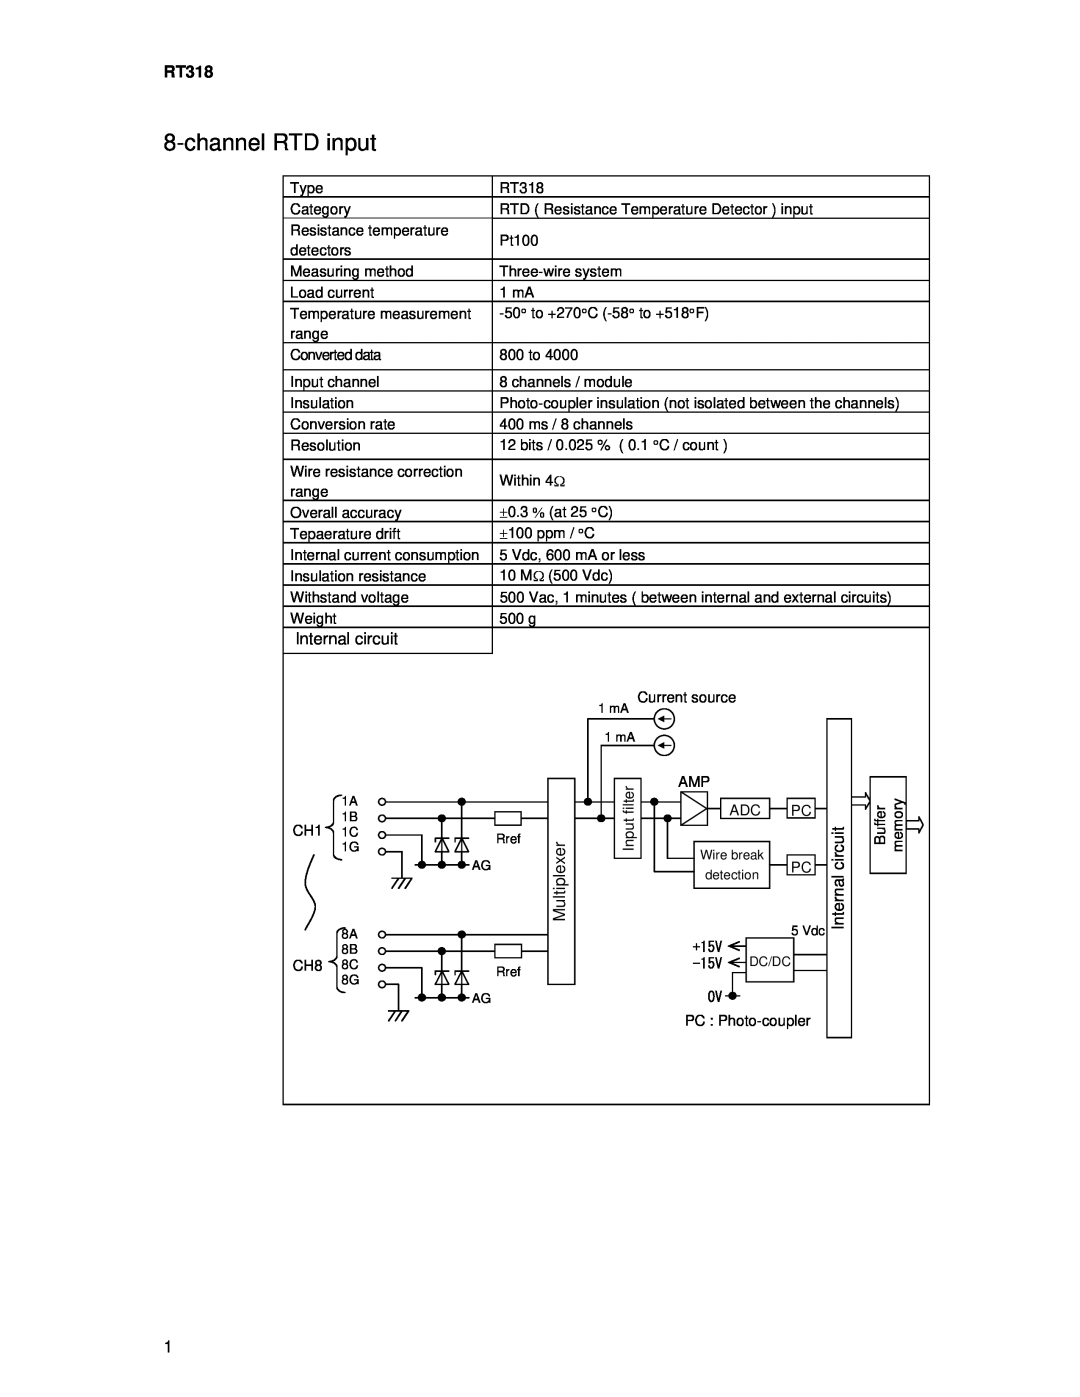 Toshiba RT318 manual channelRTD input, Internalcircuit 